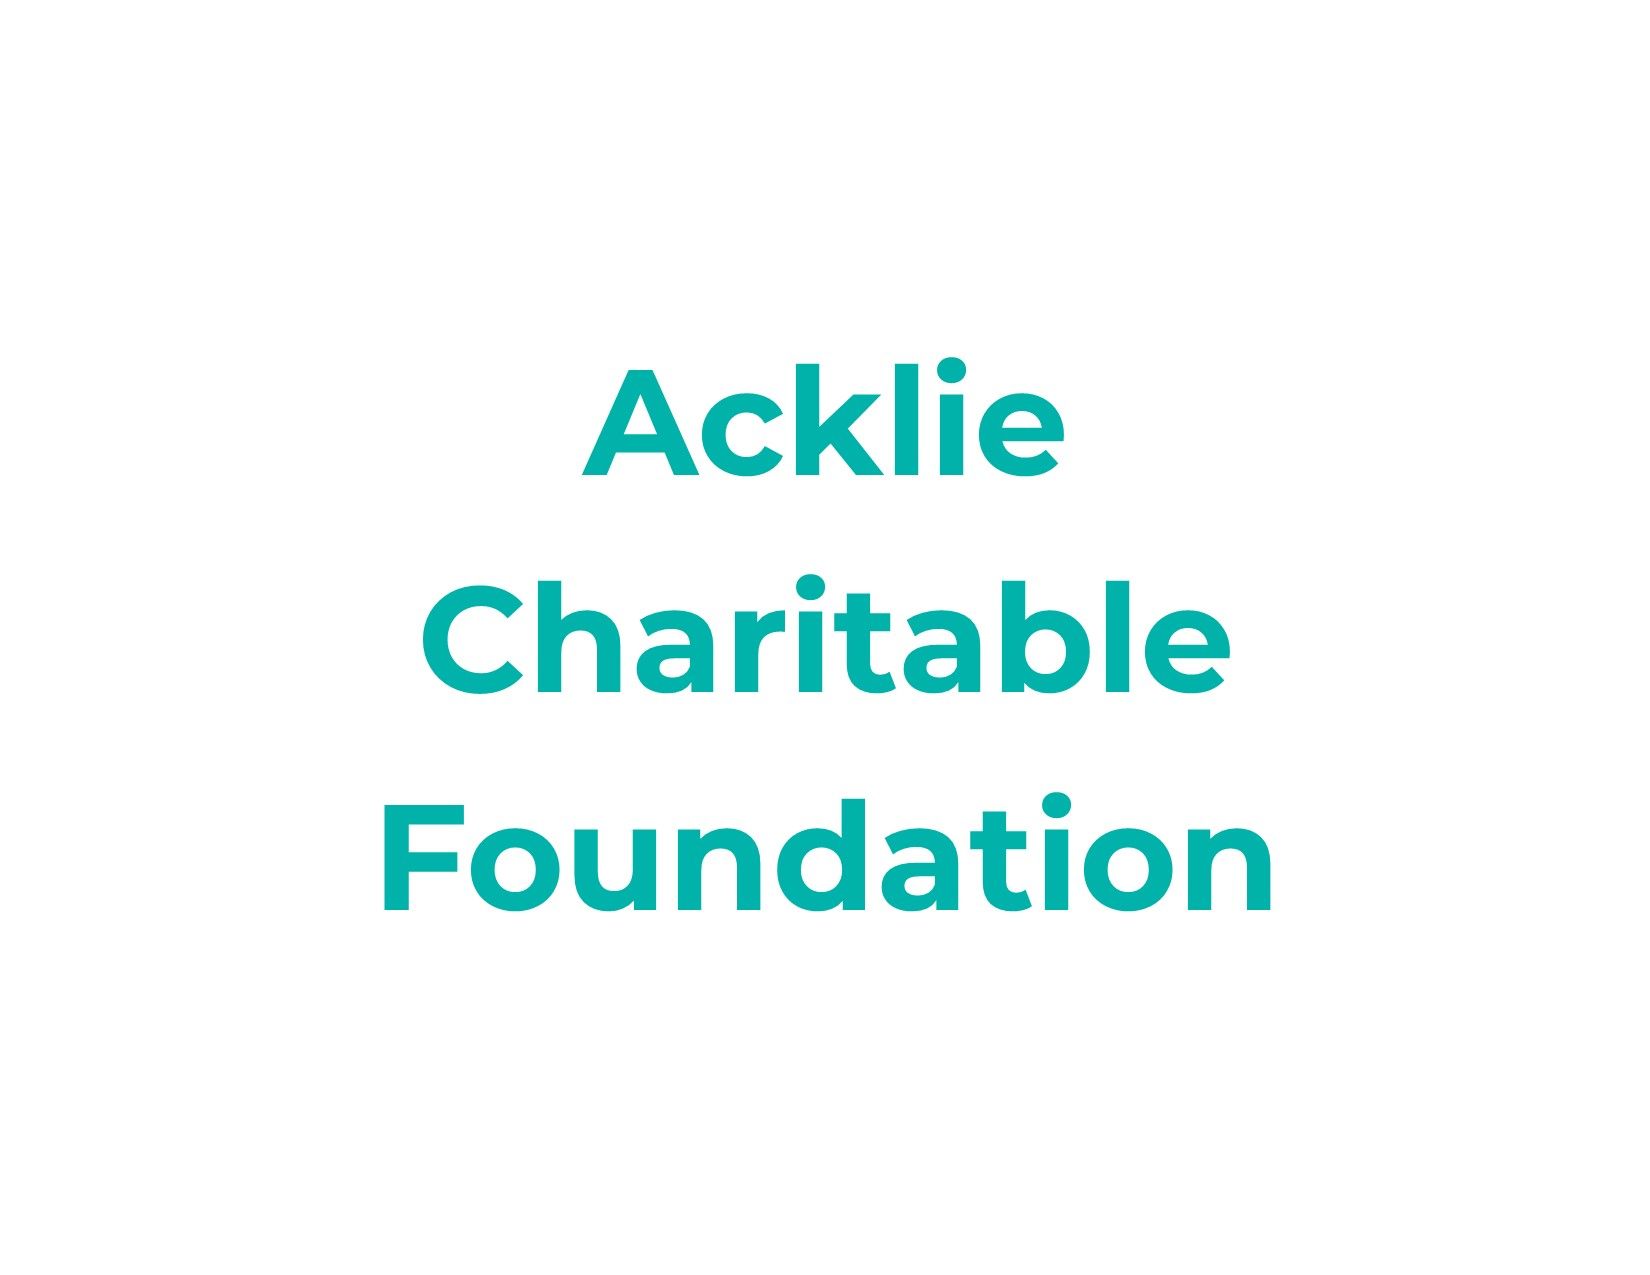 Acklie Charitable Foundation